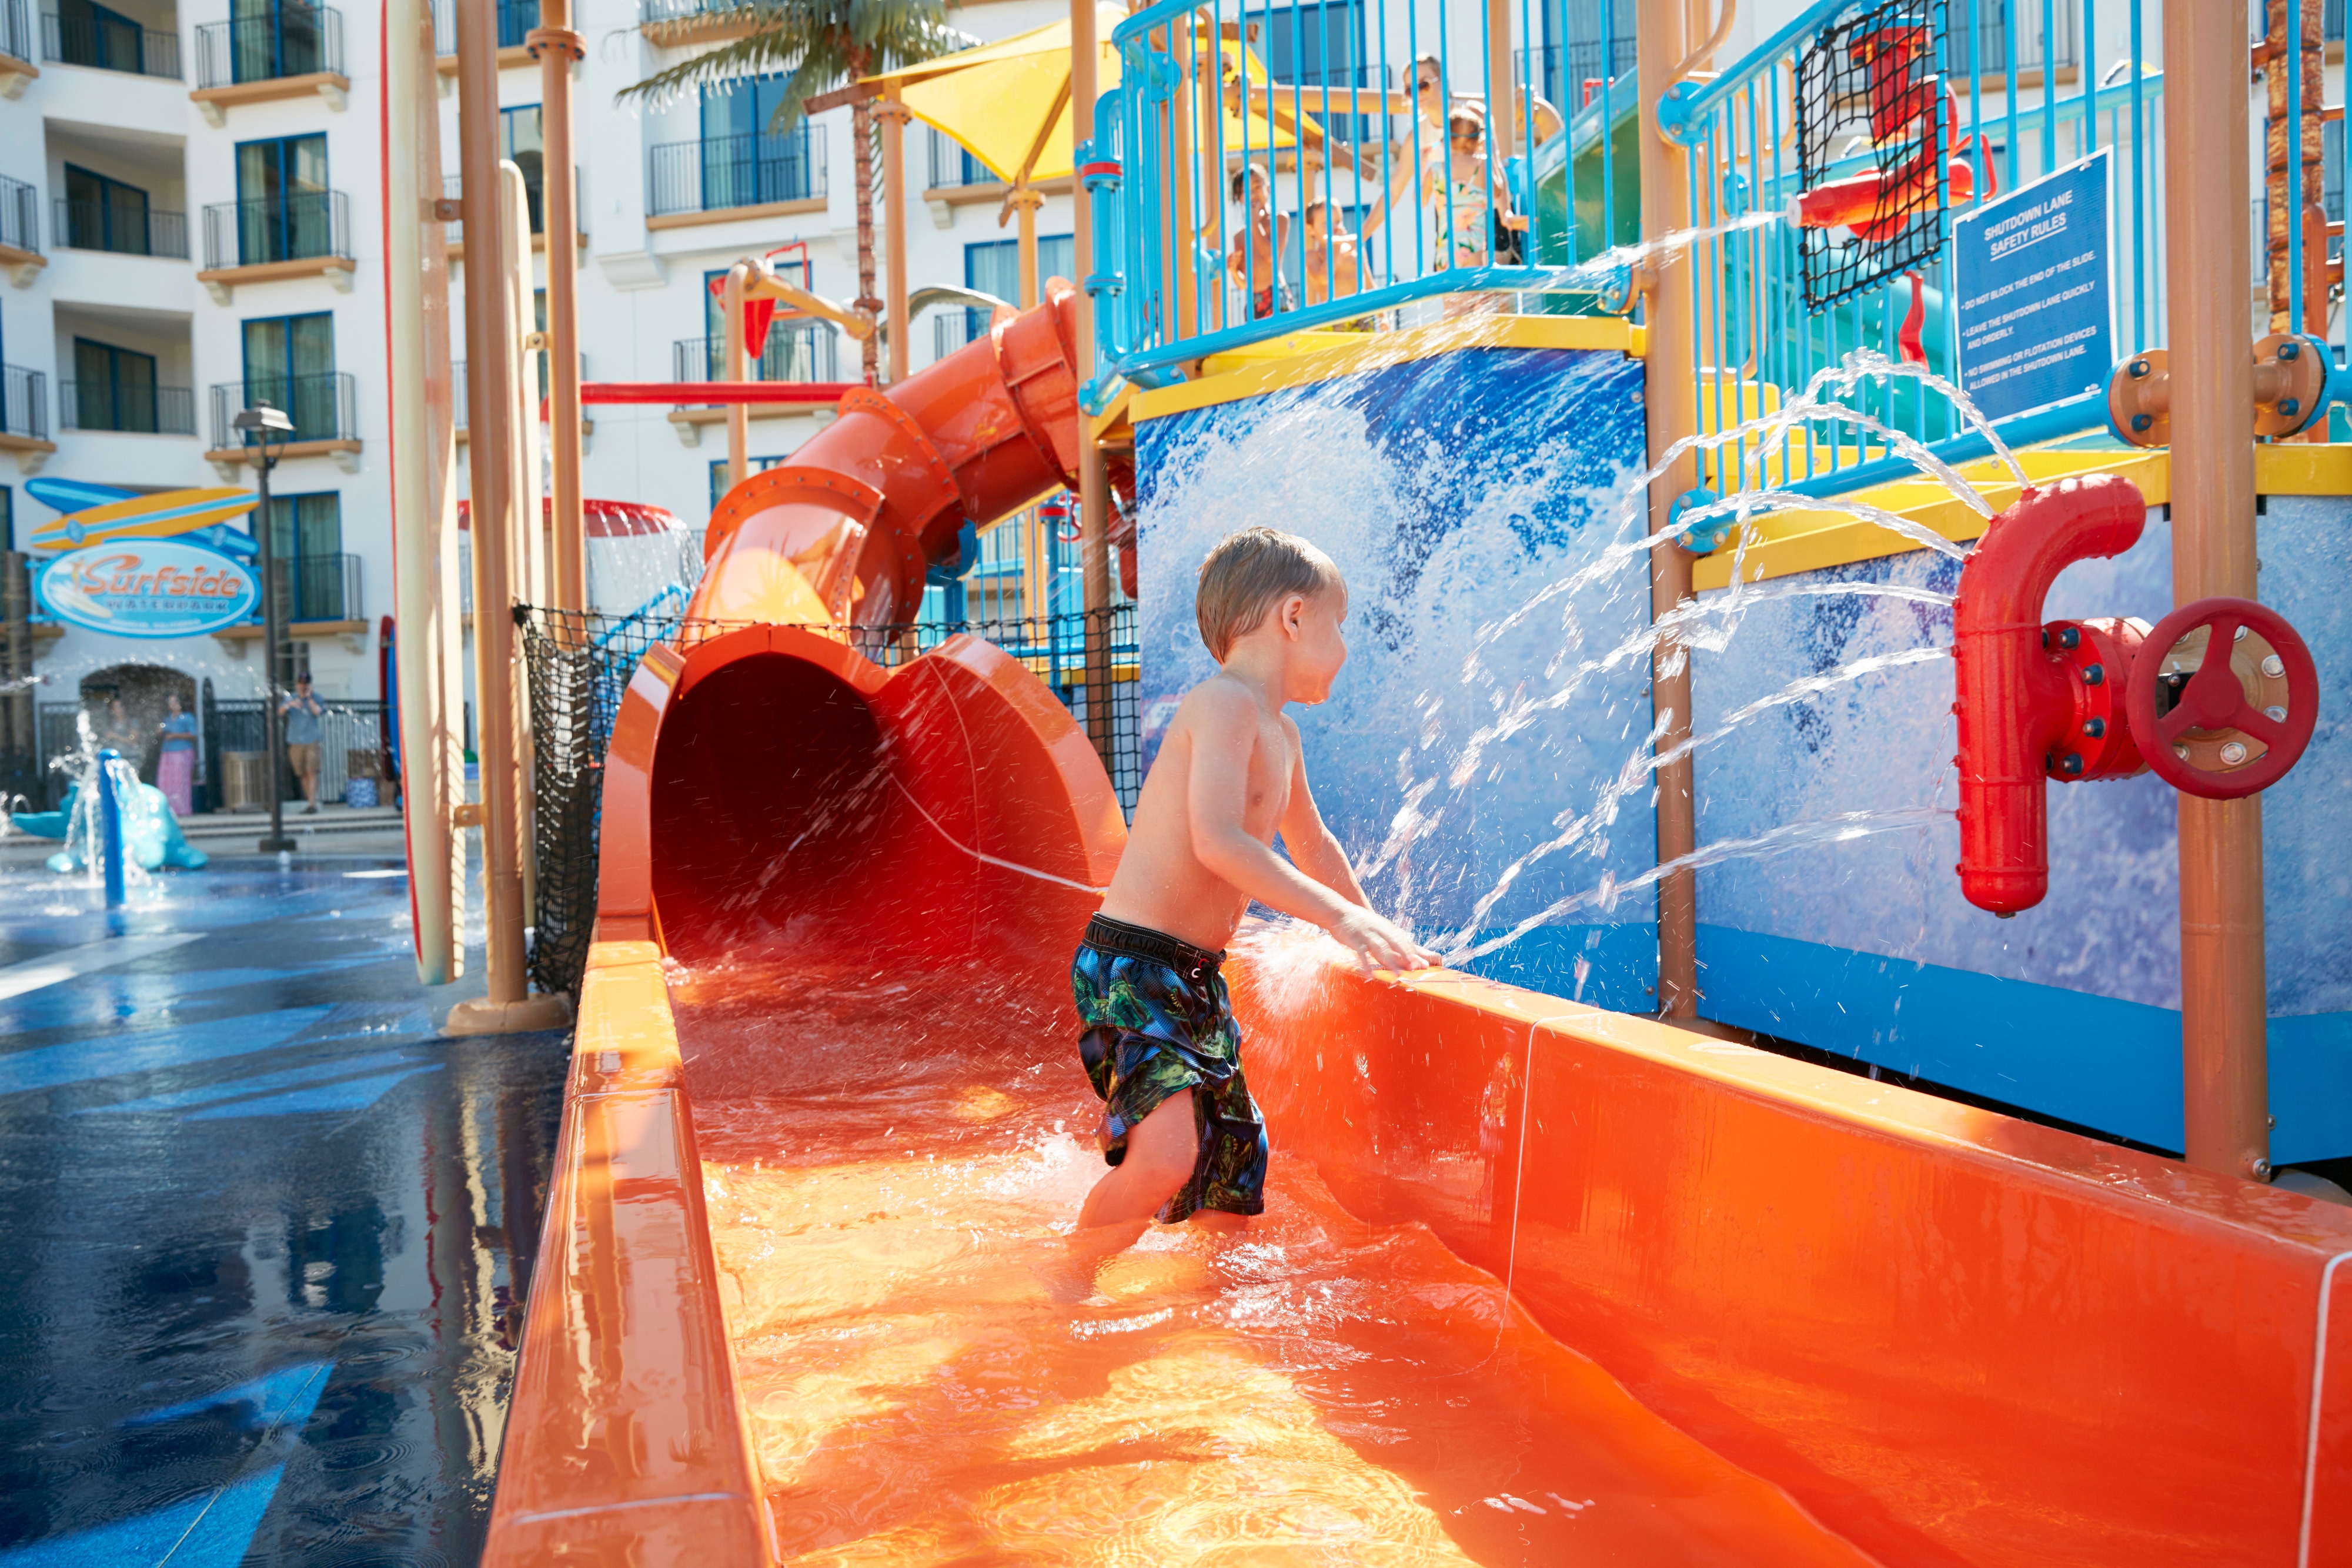 Child on water slide.